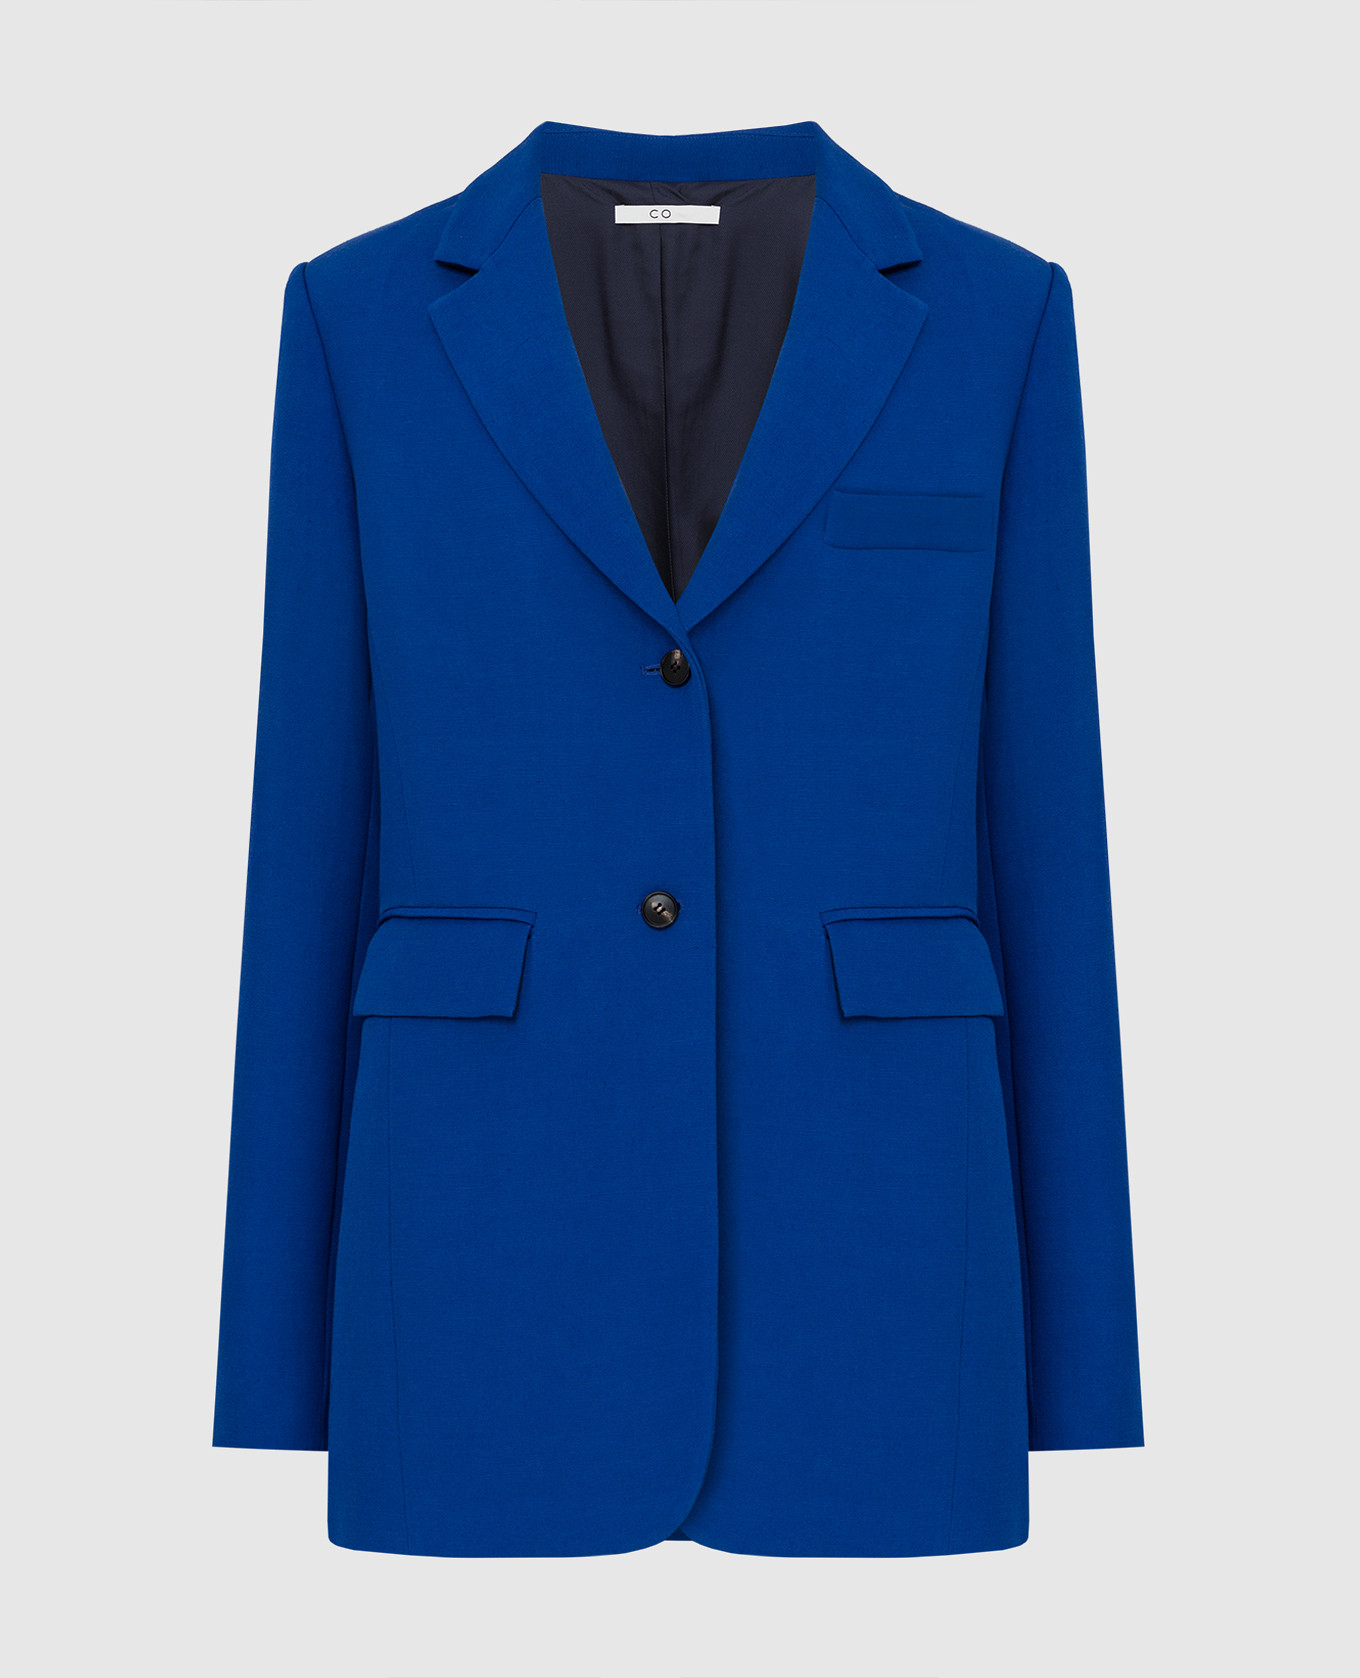 CO - Blue jacket 6593RVL buy at Symbol